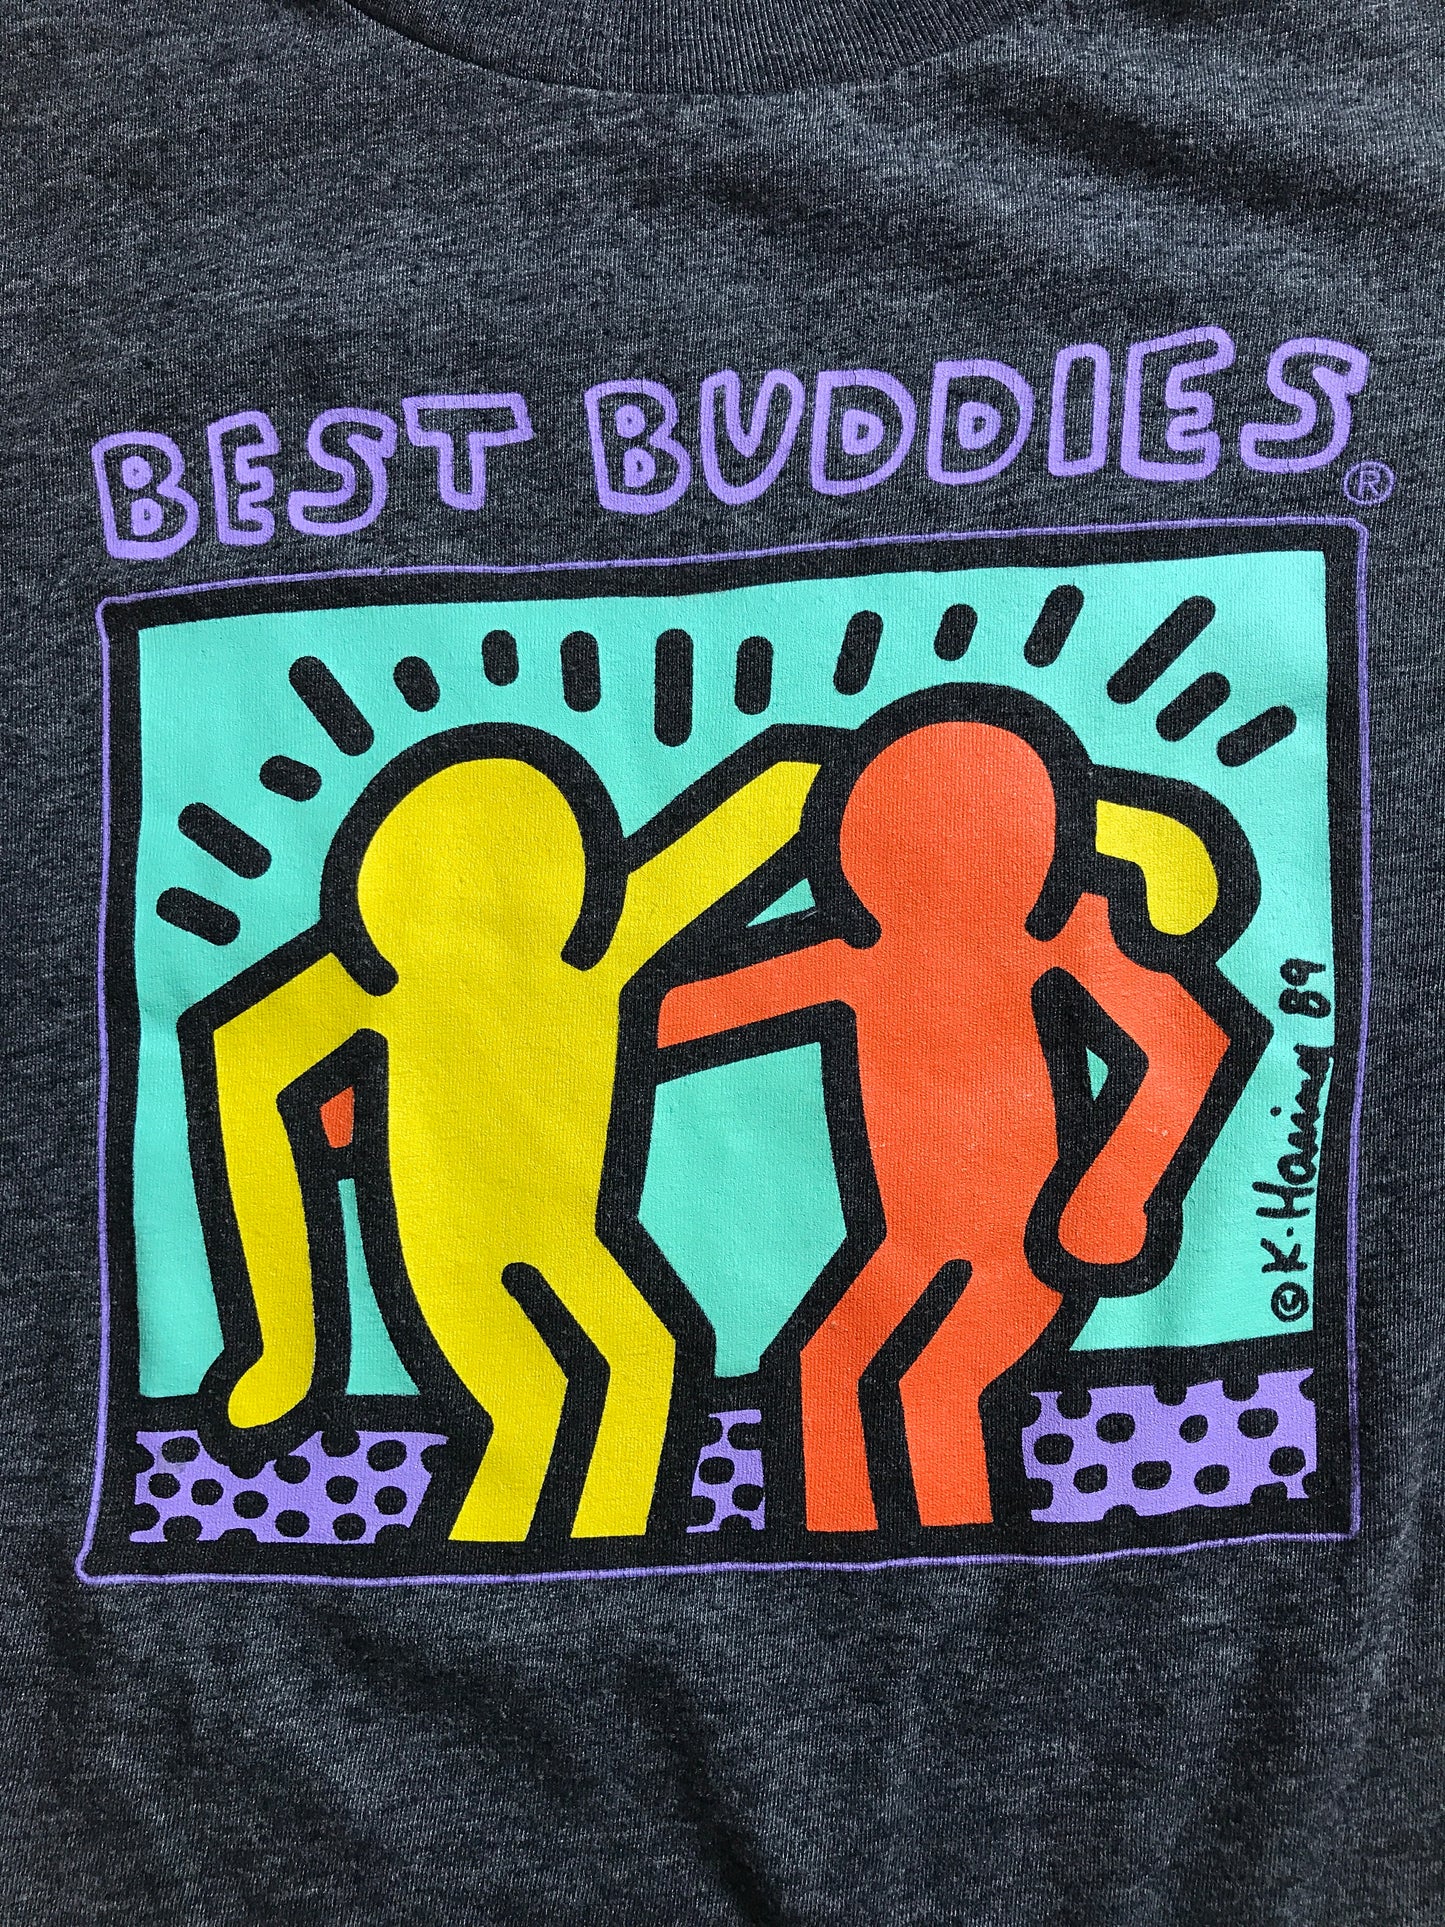 Playera Best Buddies Keith Haring